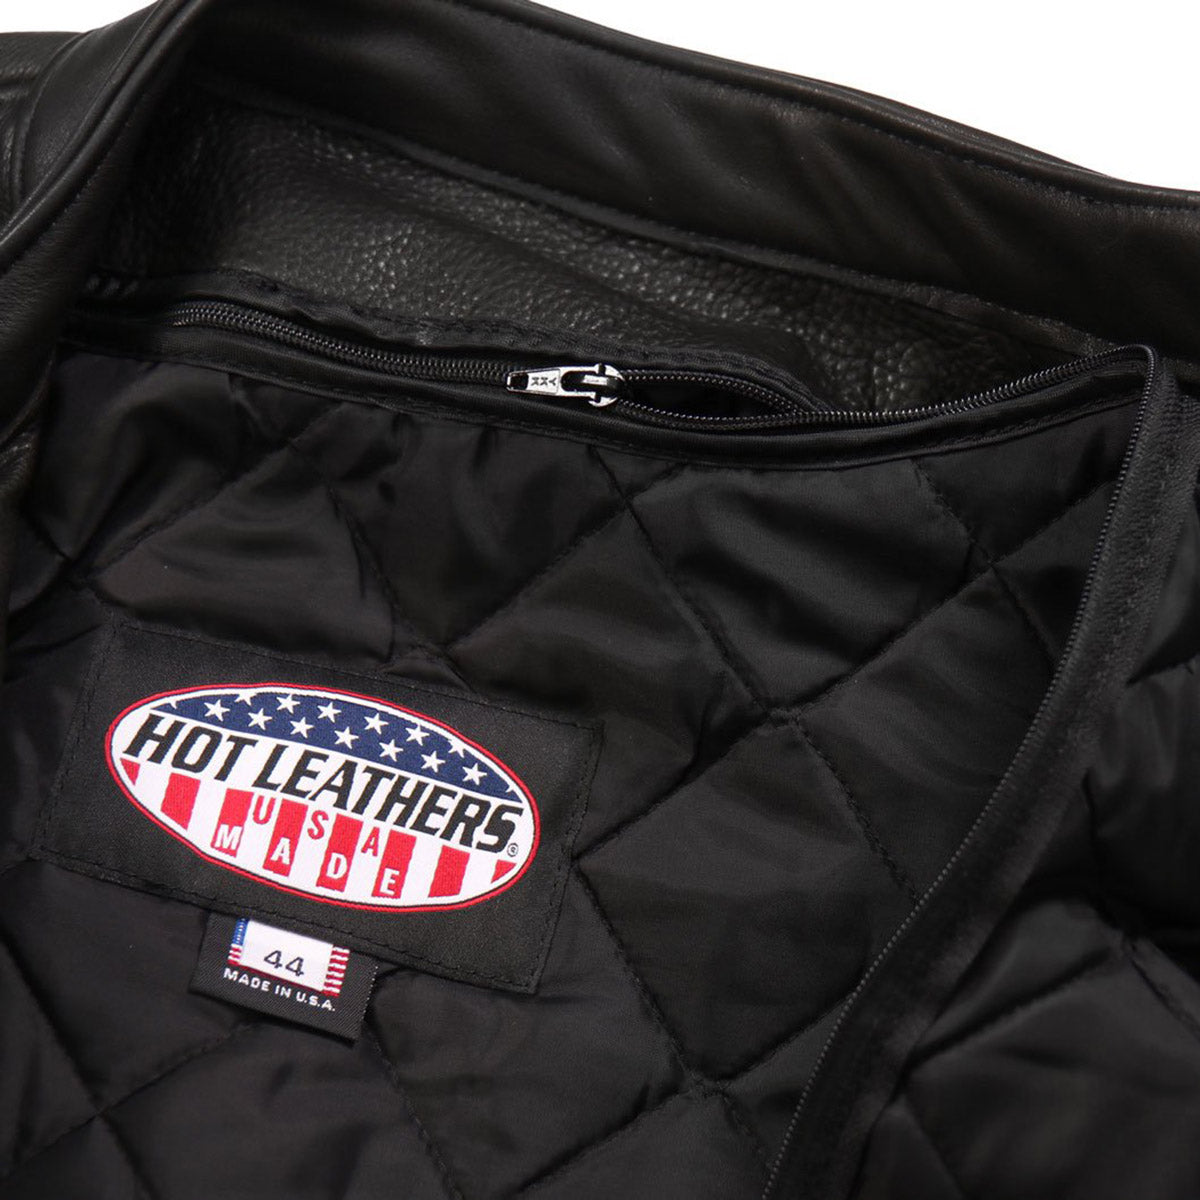 Hot Leathers JKM5001 Men's USA Made Black Premium Leather Racer Jacket